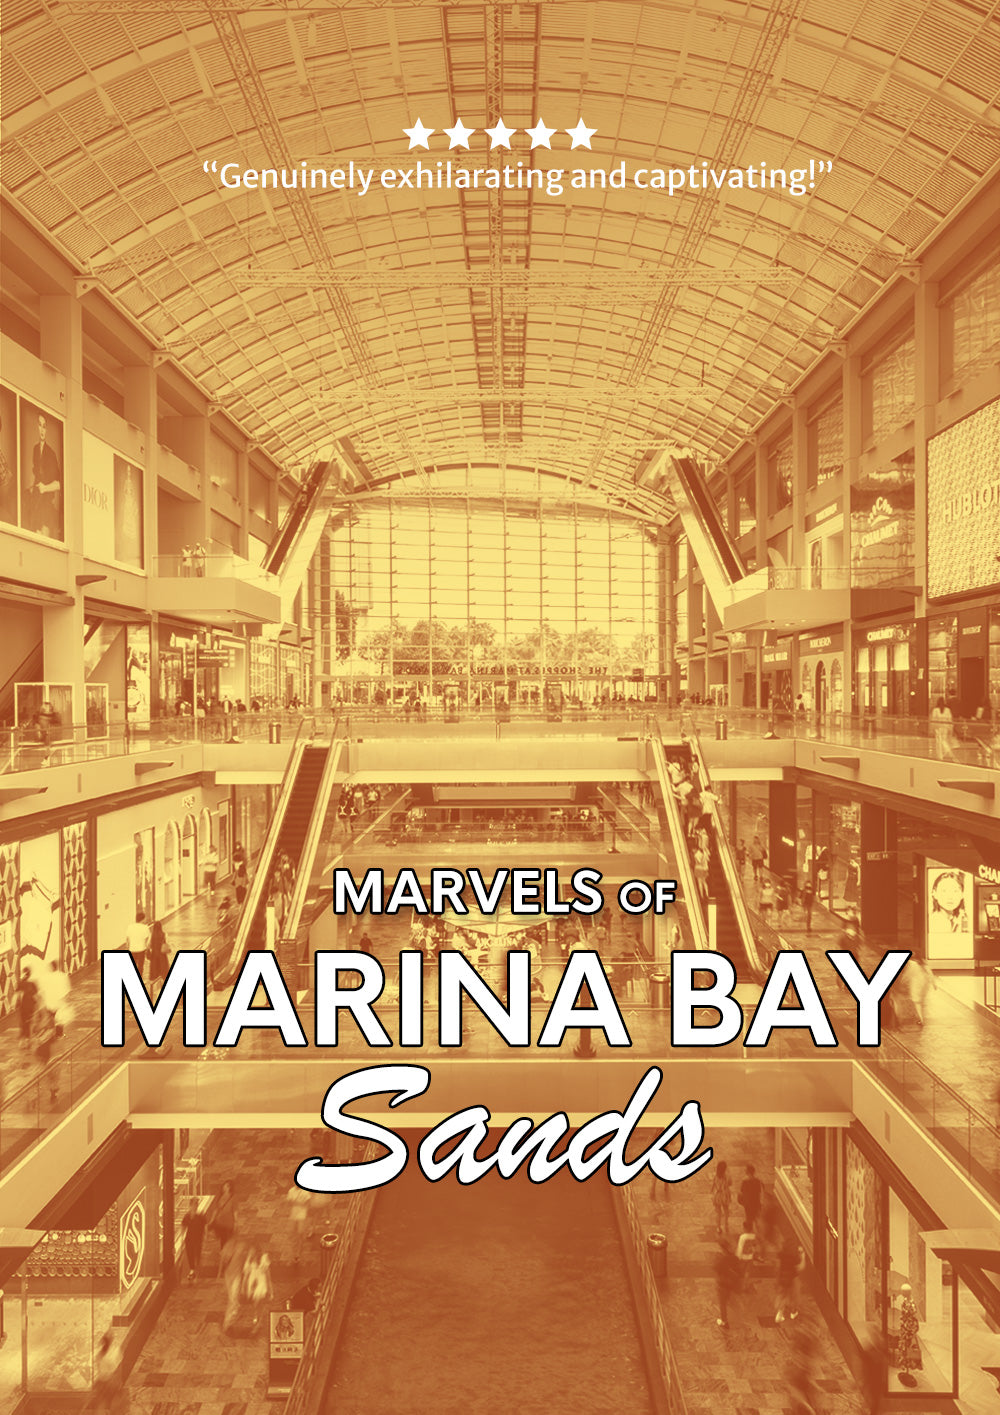 Marina Bay Sands (Corporate)